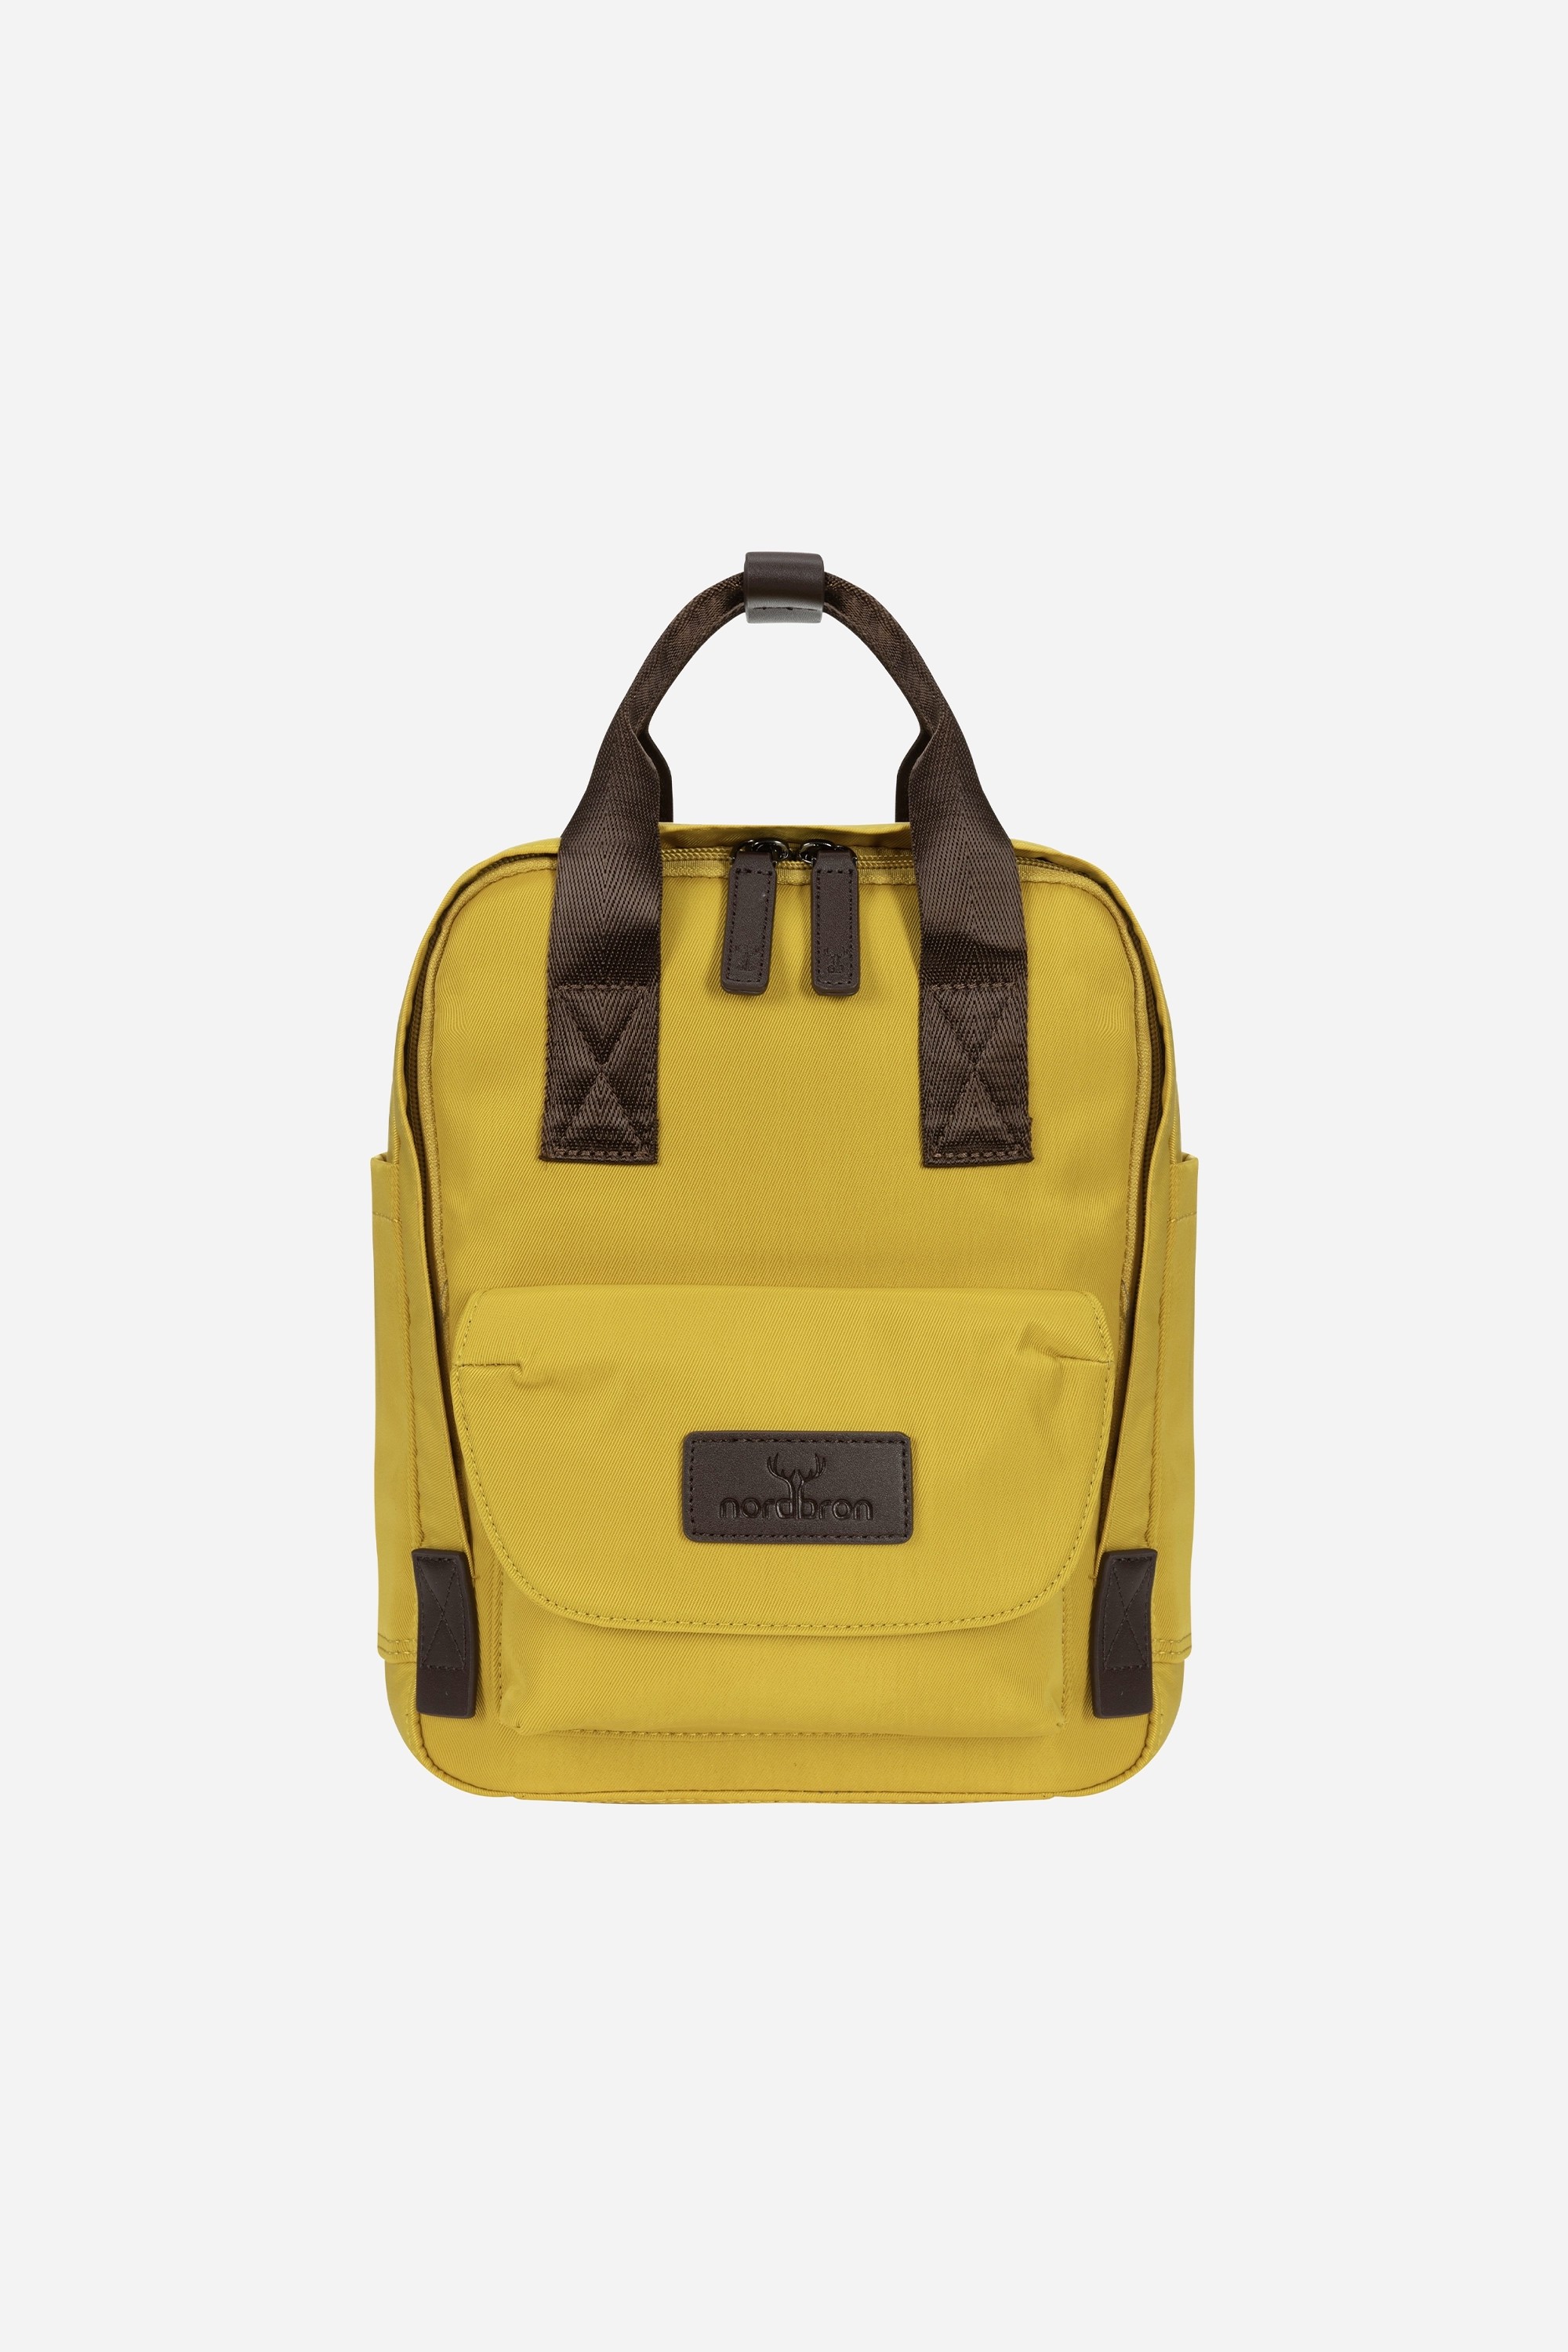 Lucerne Nordbron Mini Backpack - Mustard